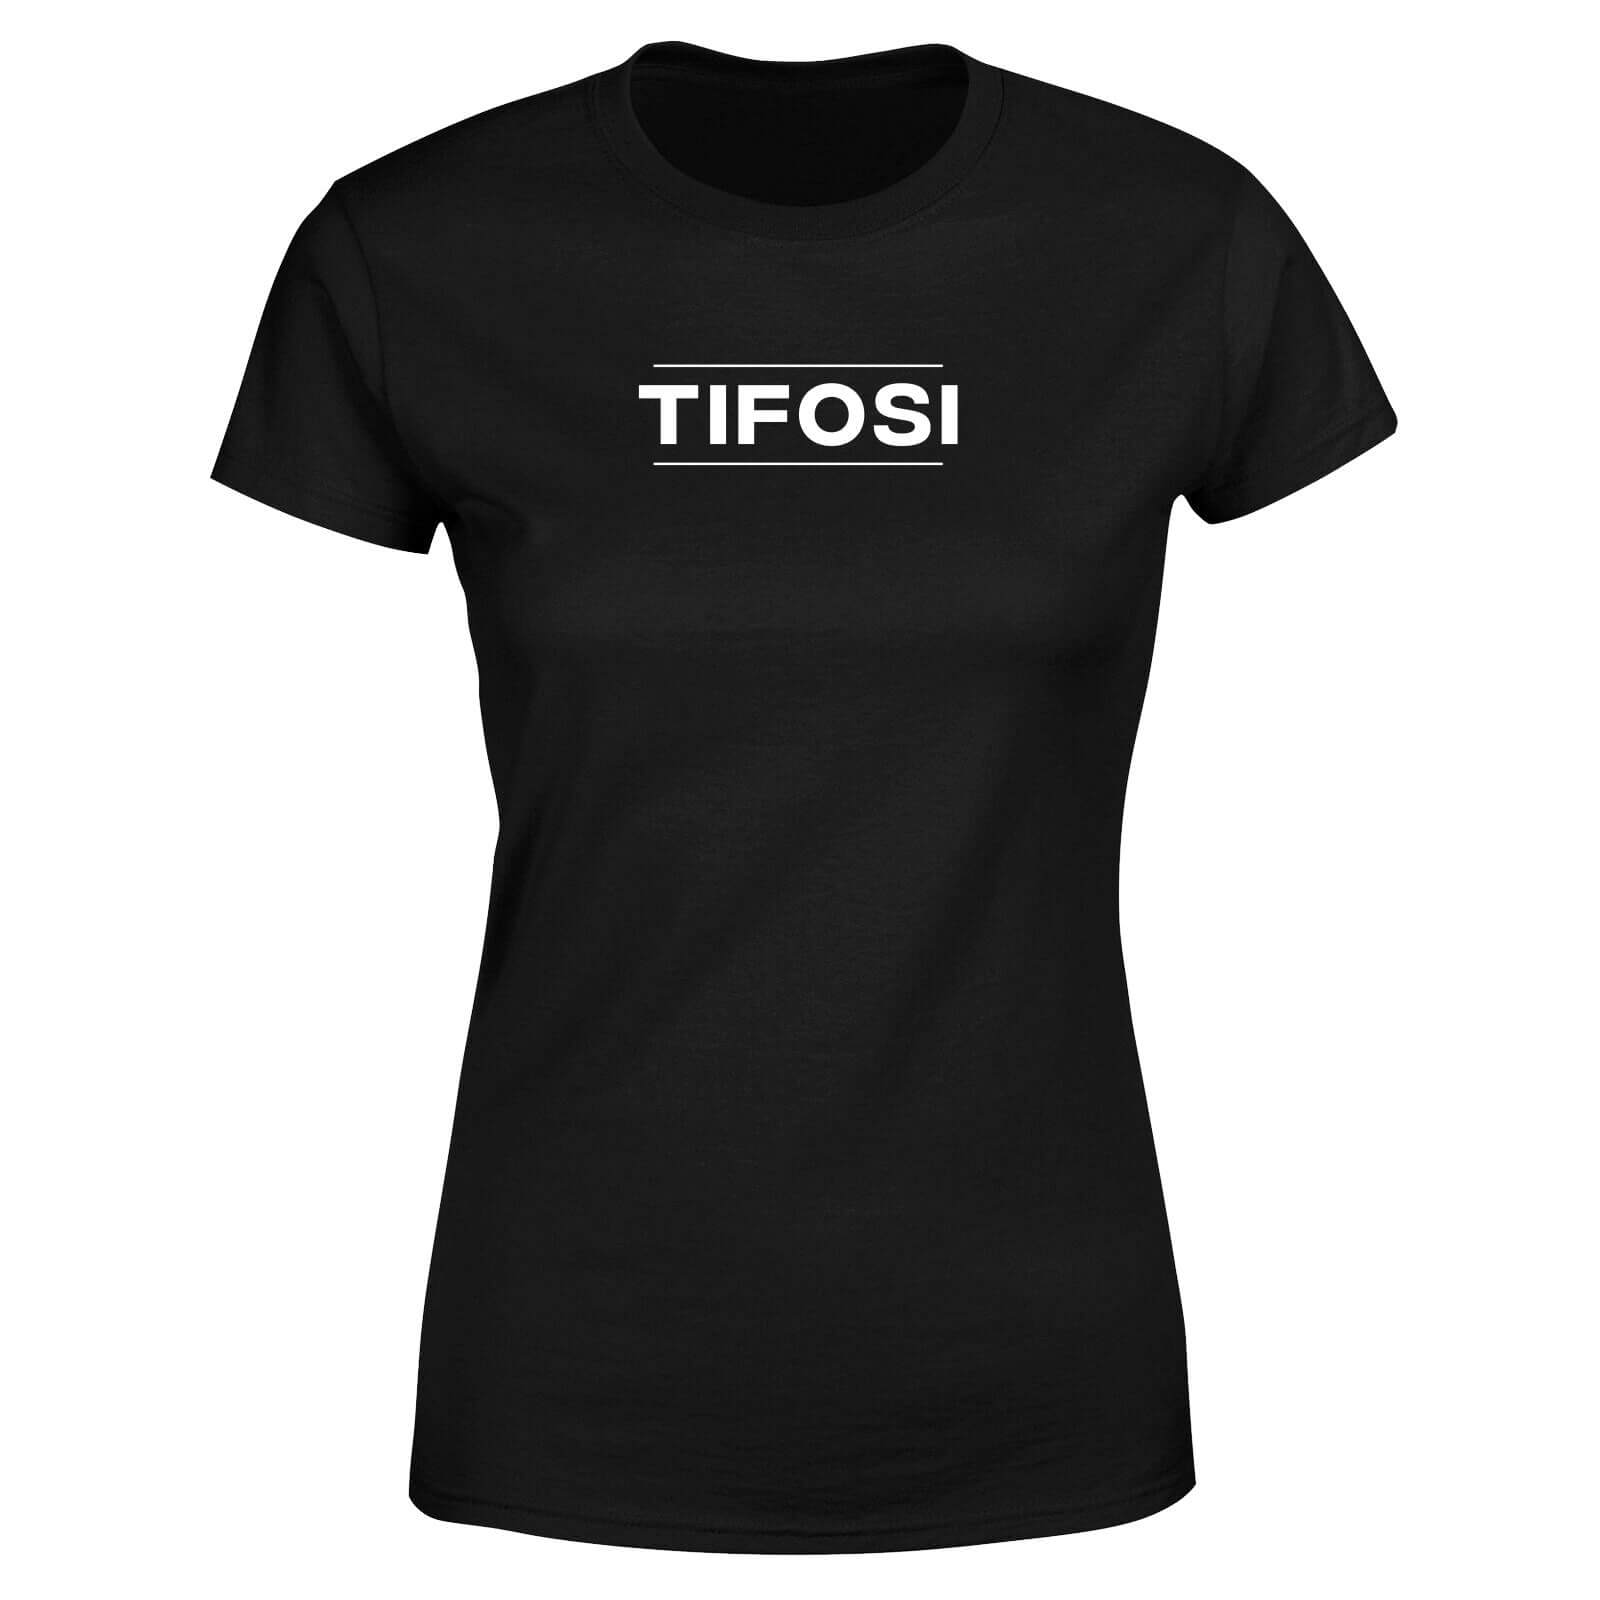 Tifosi Women's T-Shirt - Black - XL - Black